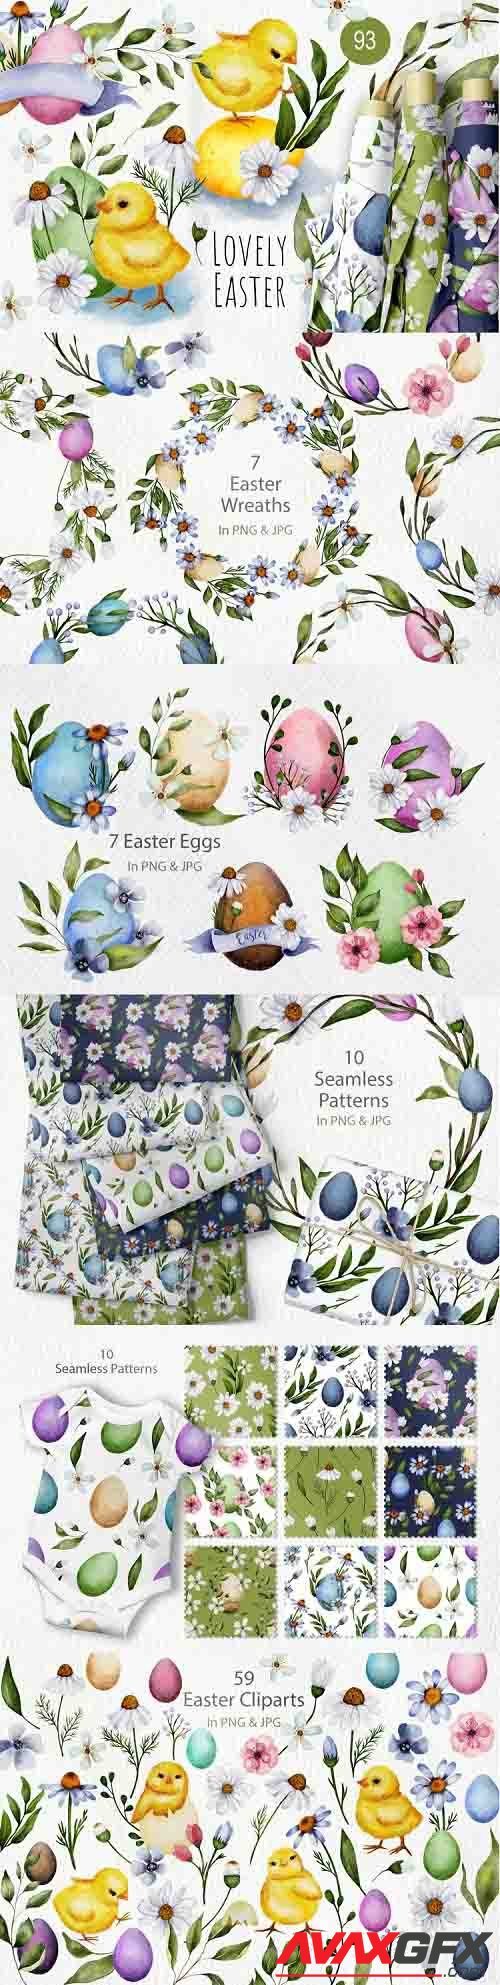 Easter Watercolor Chicken Bundle - 1237683